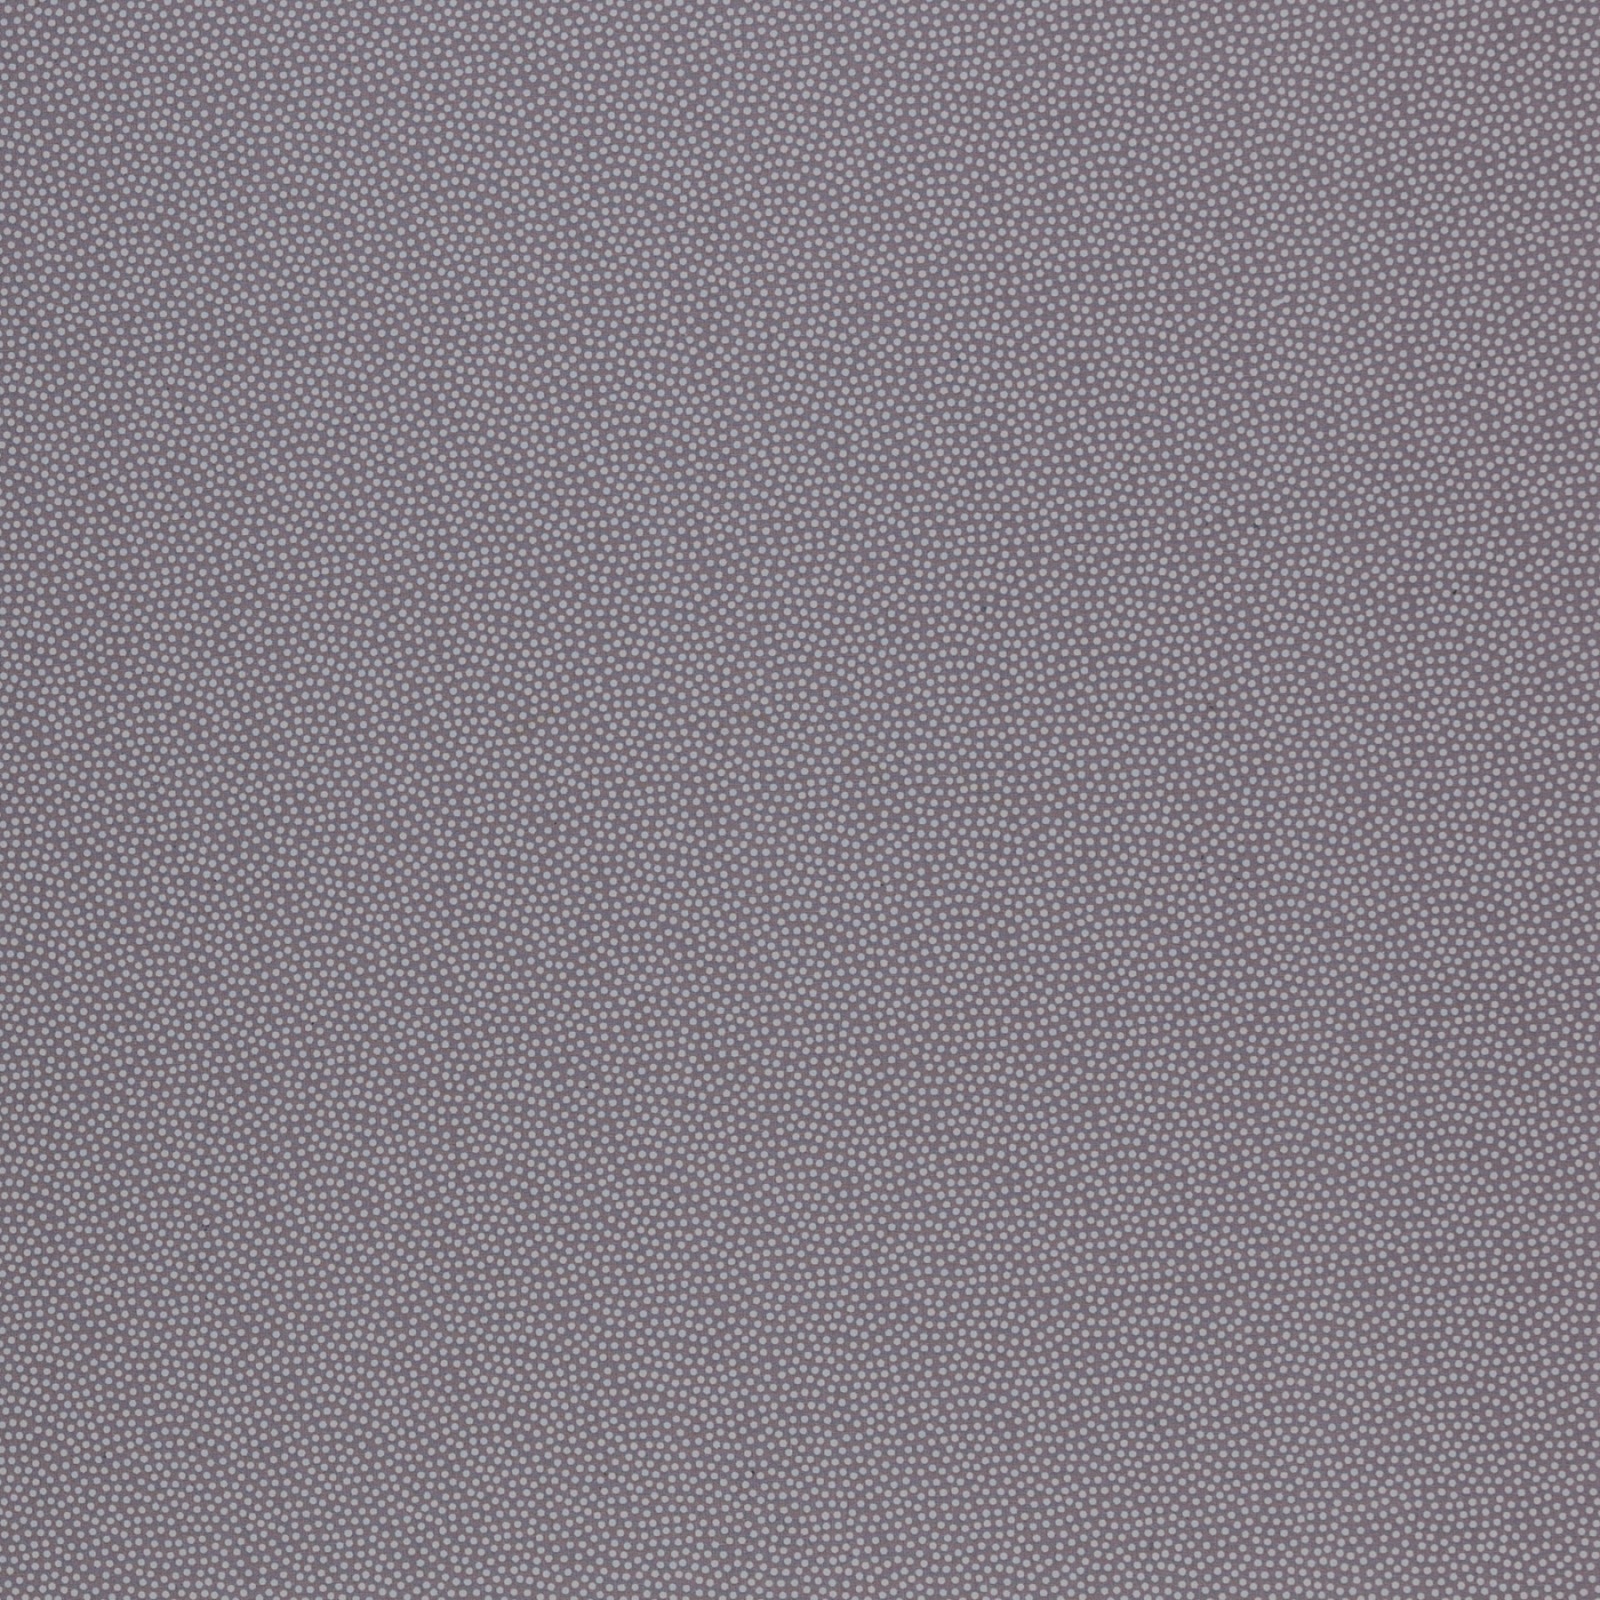 Baumwollwebware - unregelmäßige Punkte - grau - Ton in Ton | 11,00 EUR/m 2